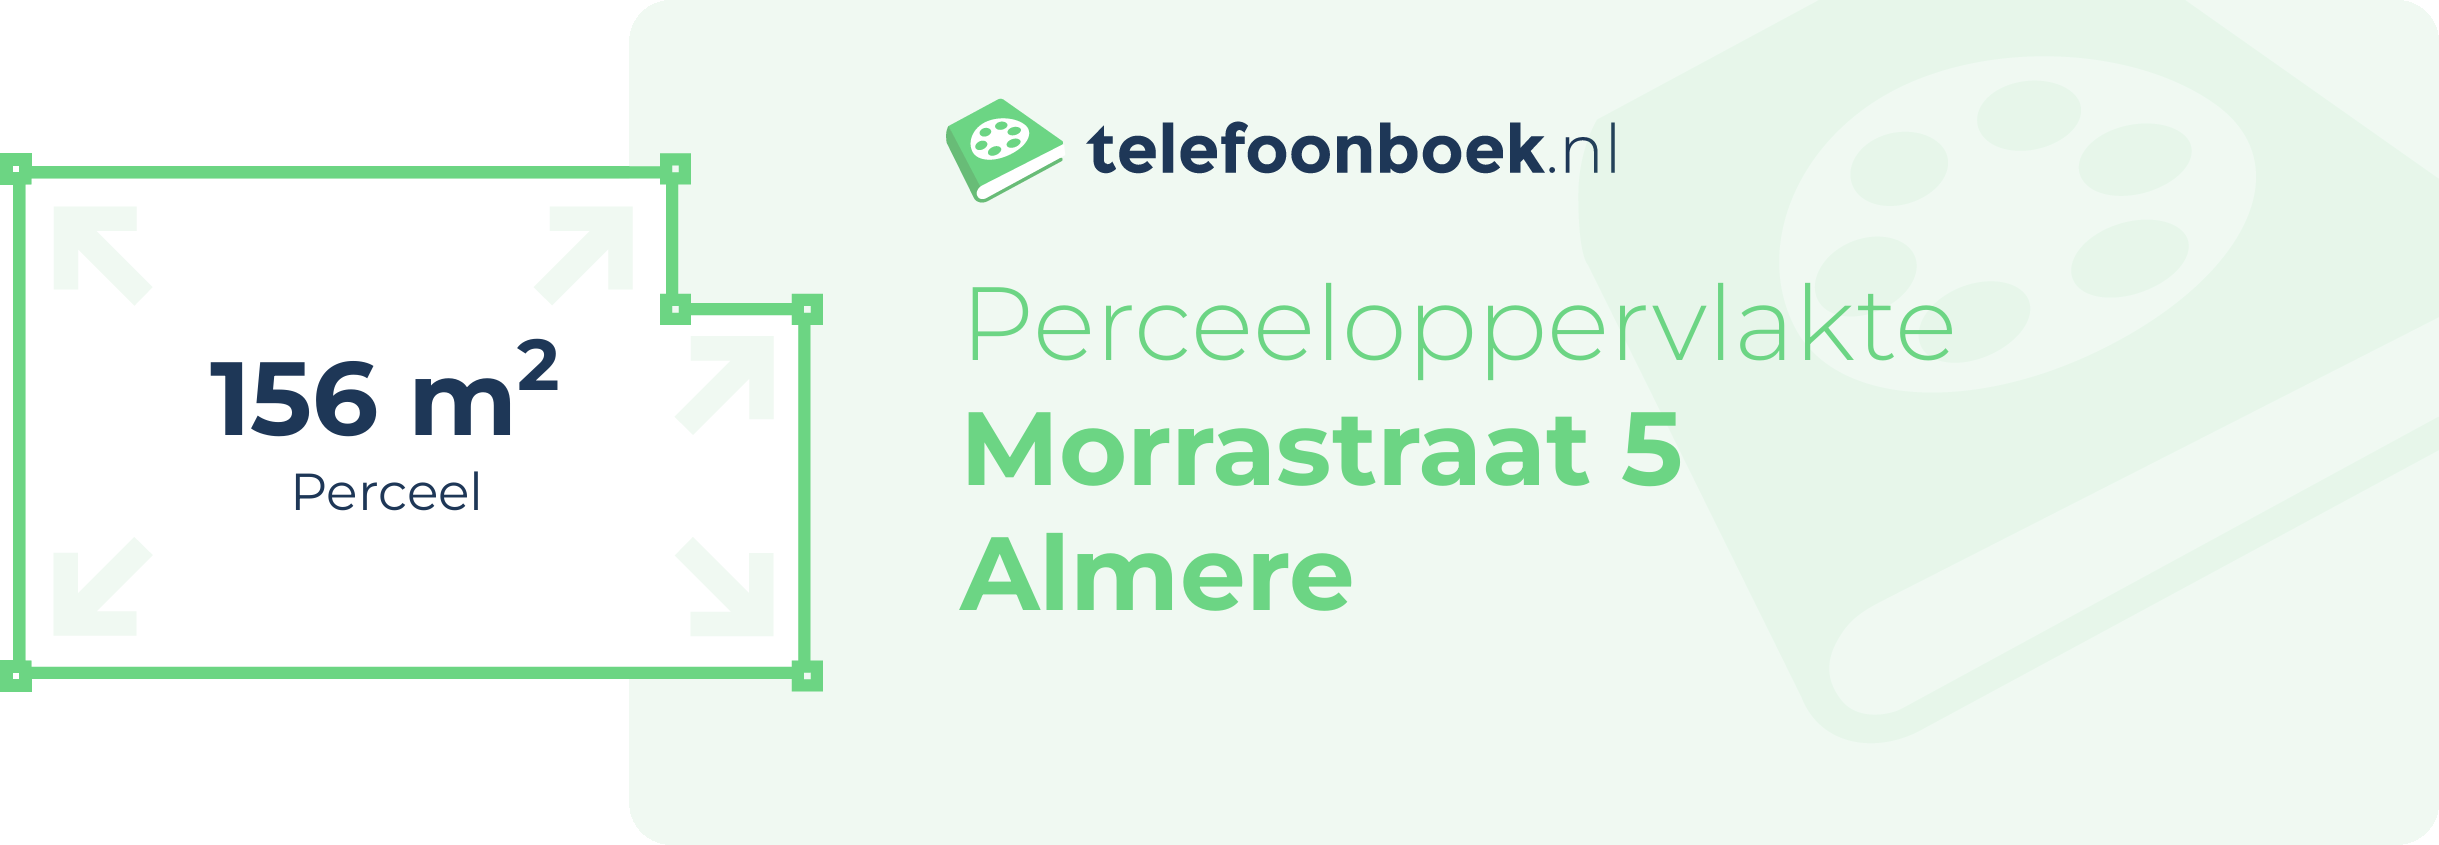 Perceeloppervlakte Morrastraat 5 Almere